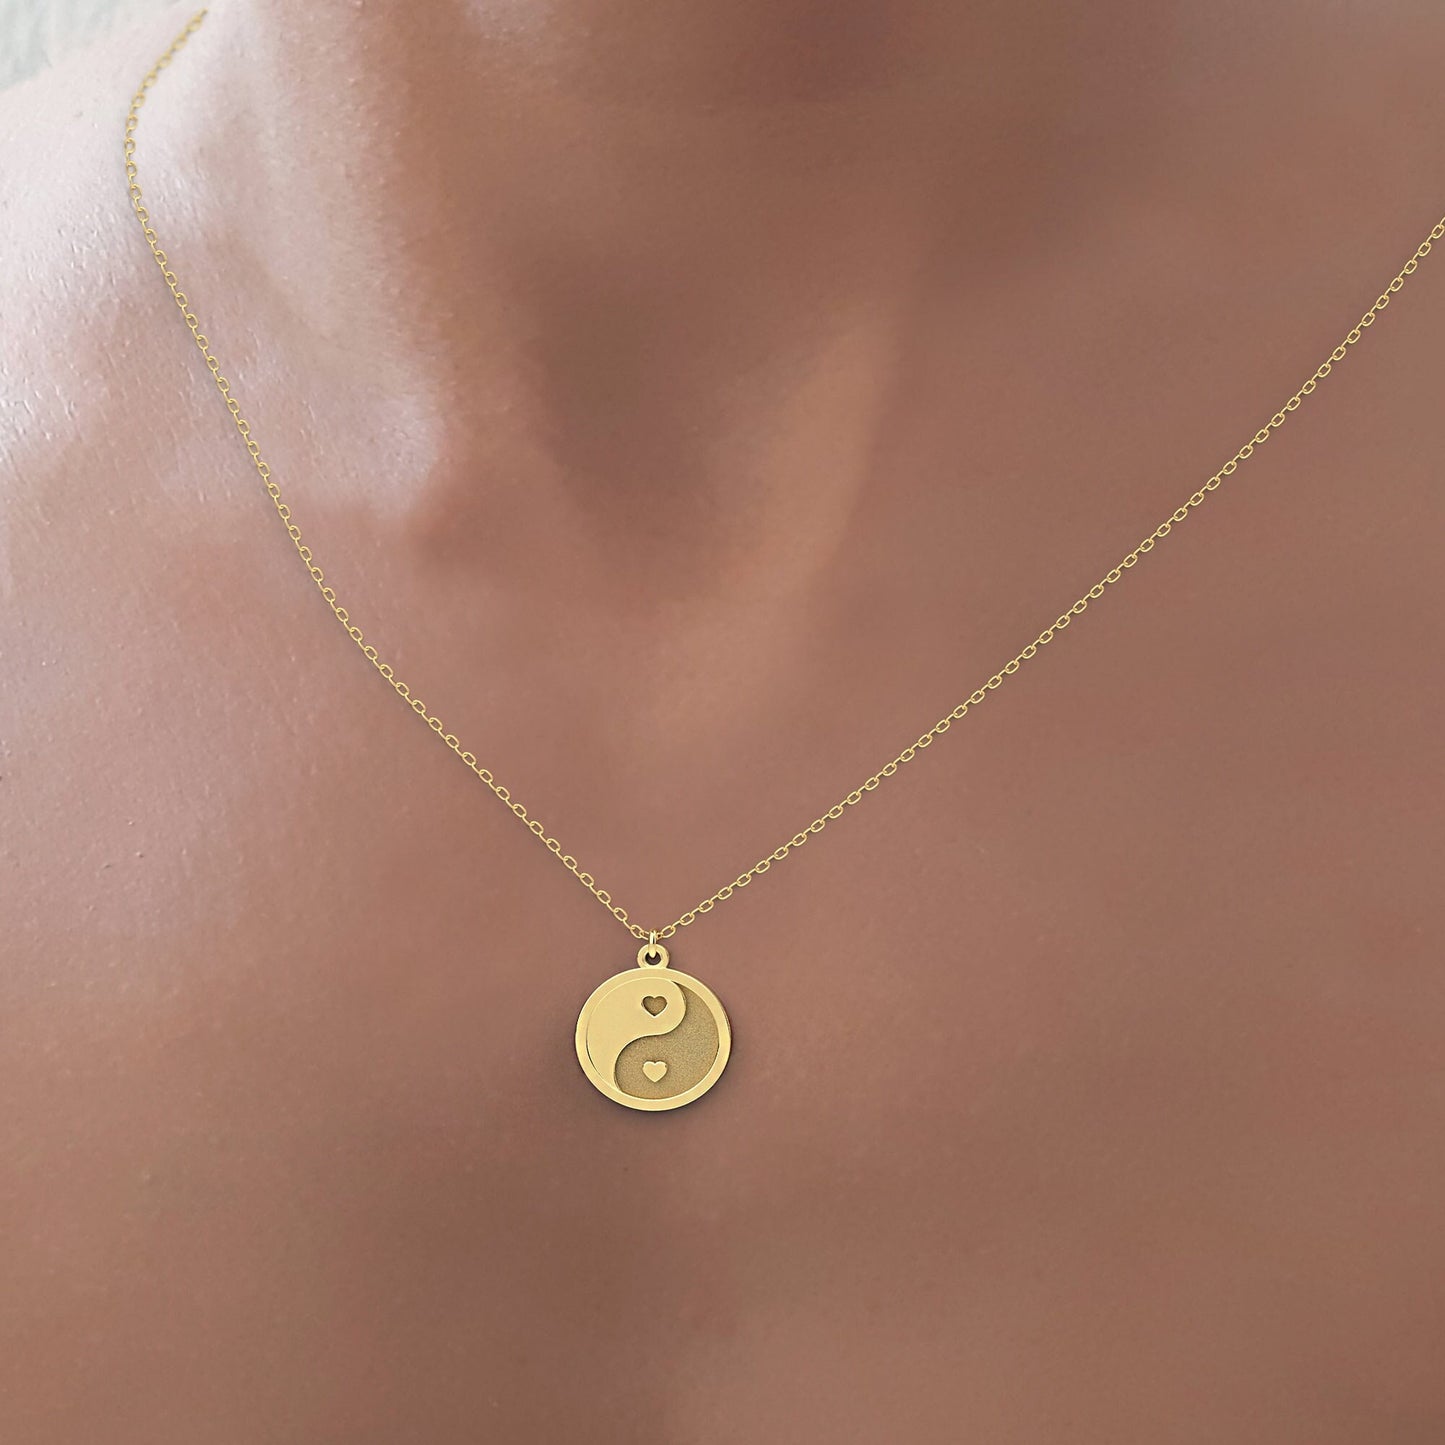 Yin Yang Heart Necklace